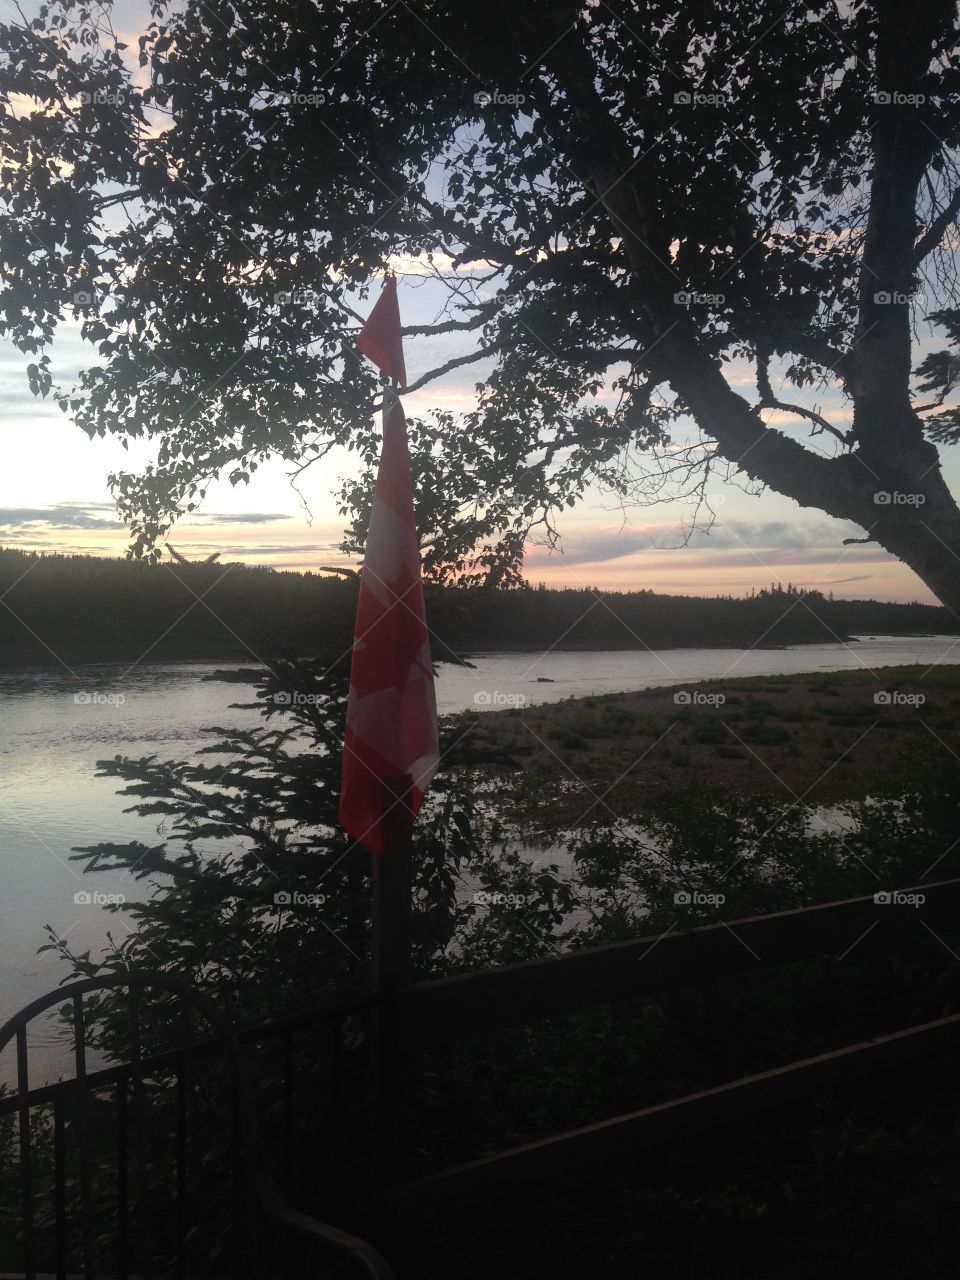 Canadian flag at rest